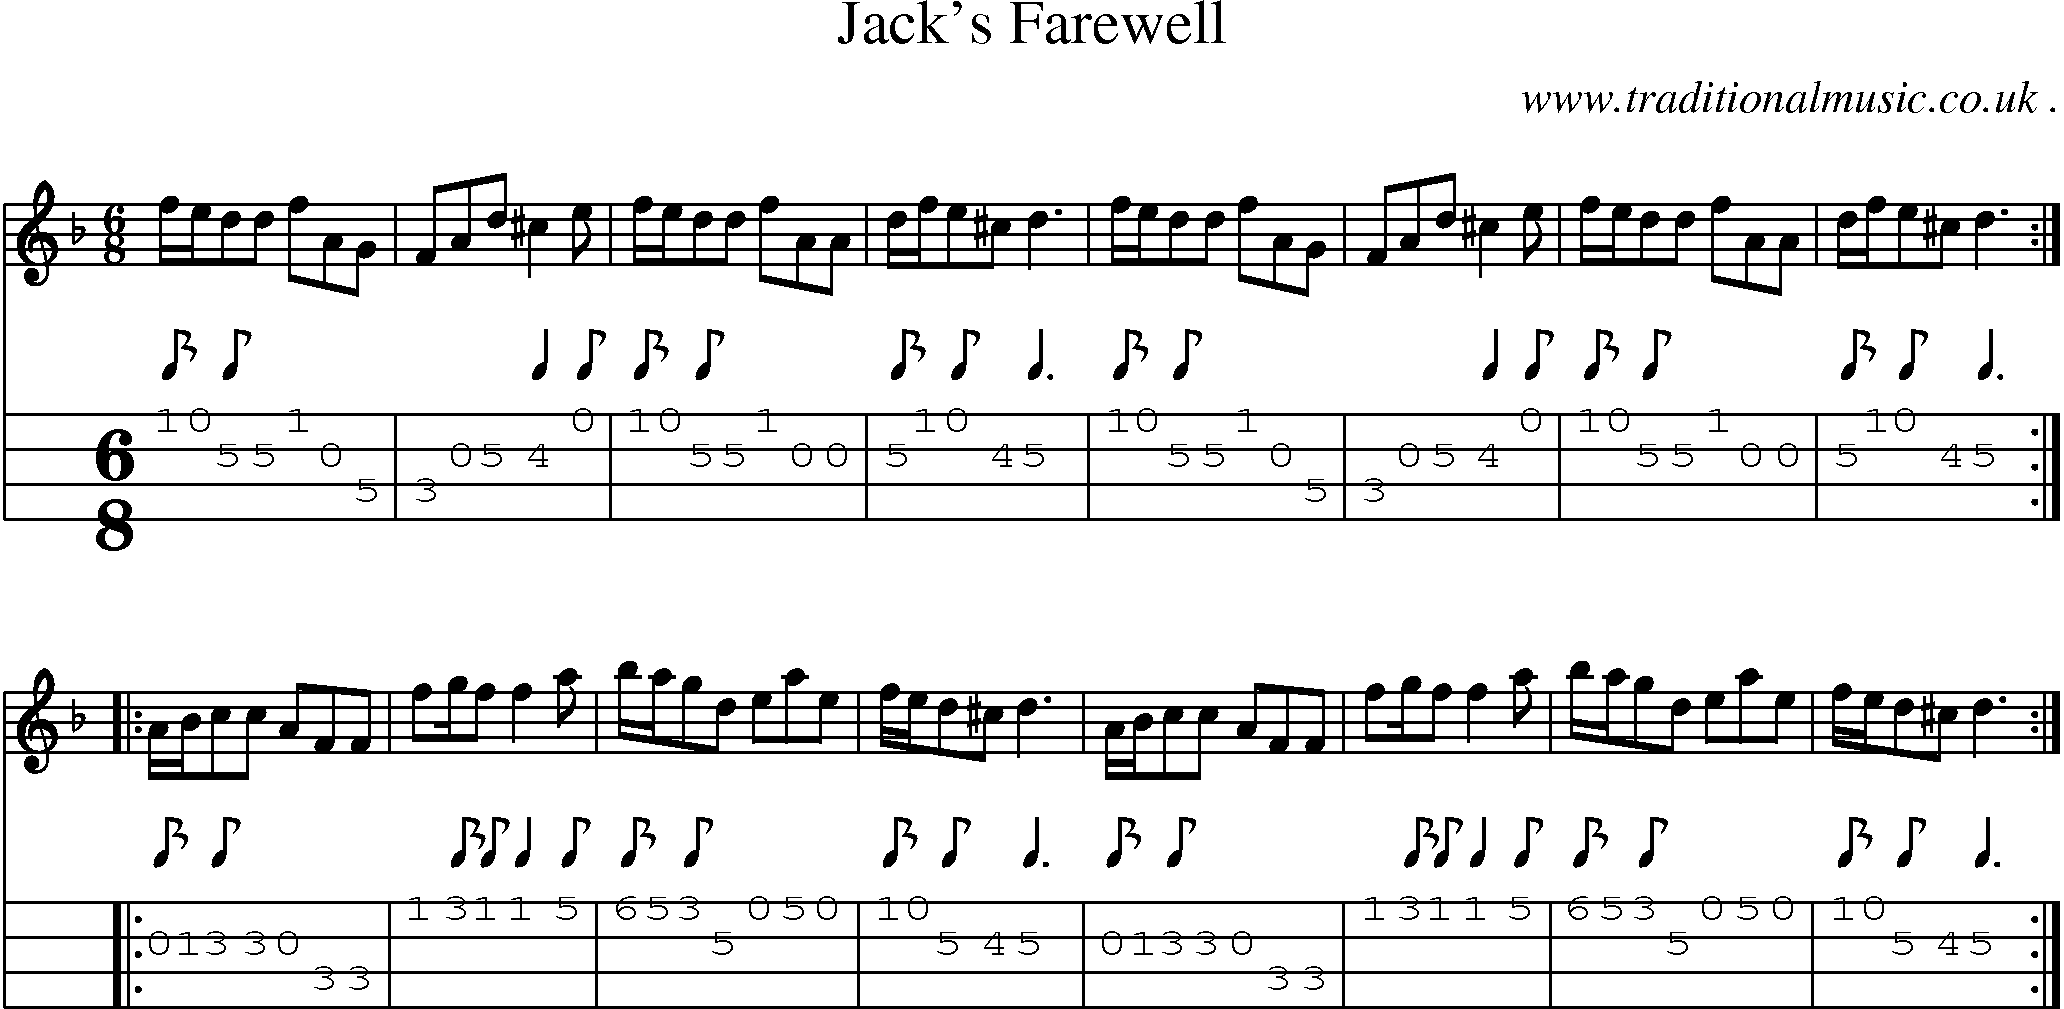 Sheet-Music and Mandolin Tabs for Jacks Farewell